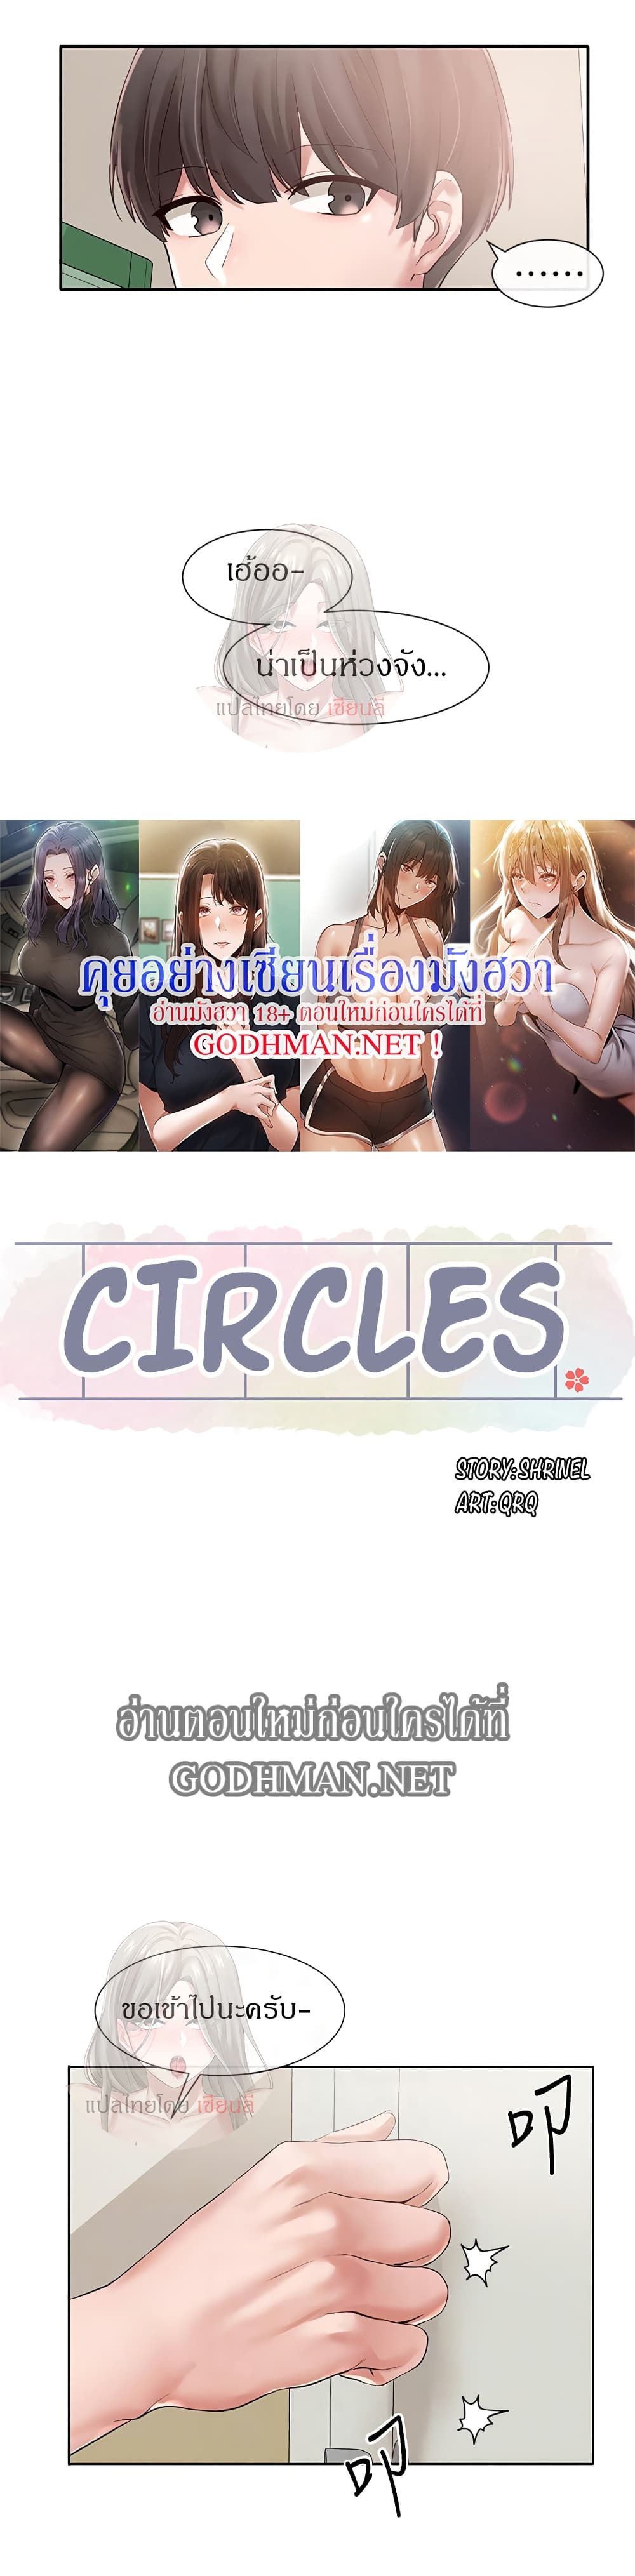 Theater-Society-Circles-49_17.jpg